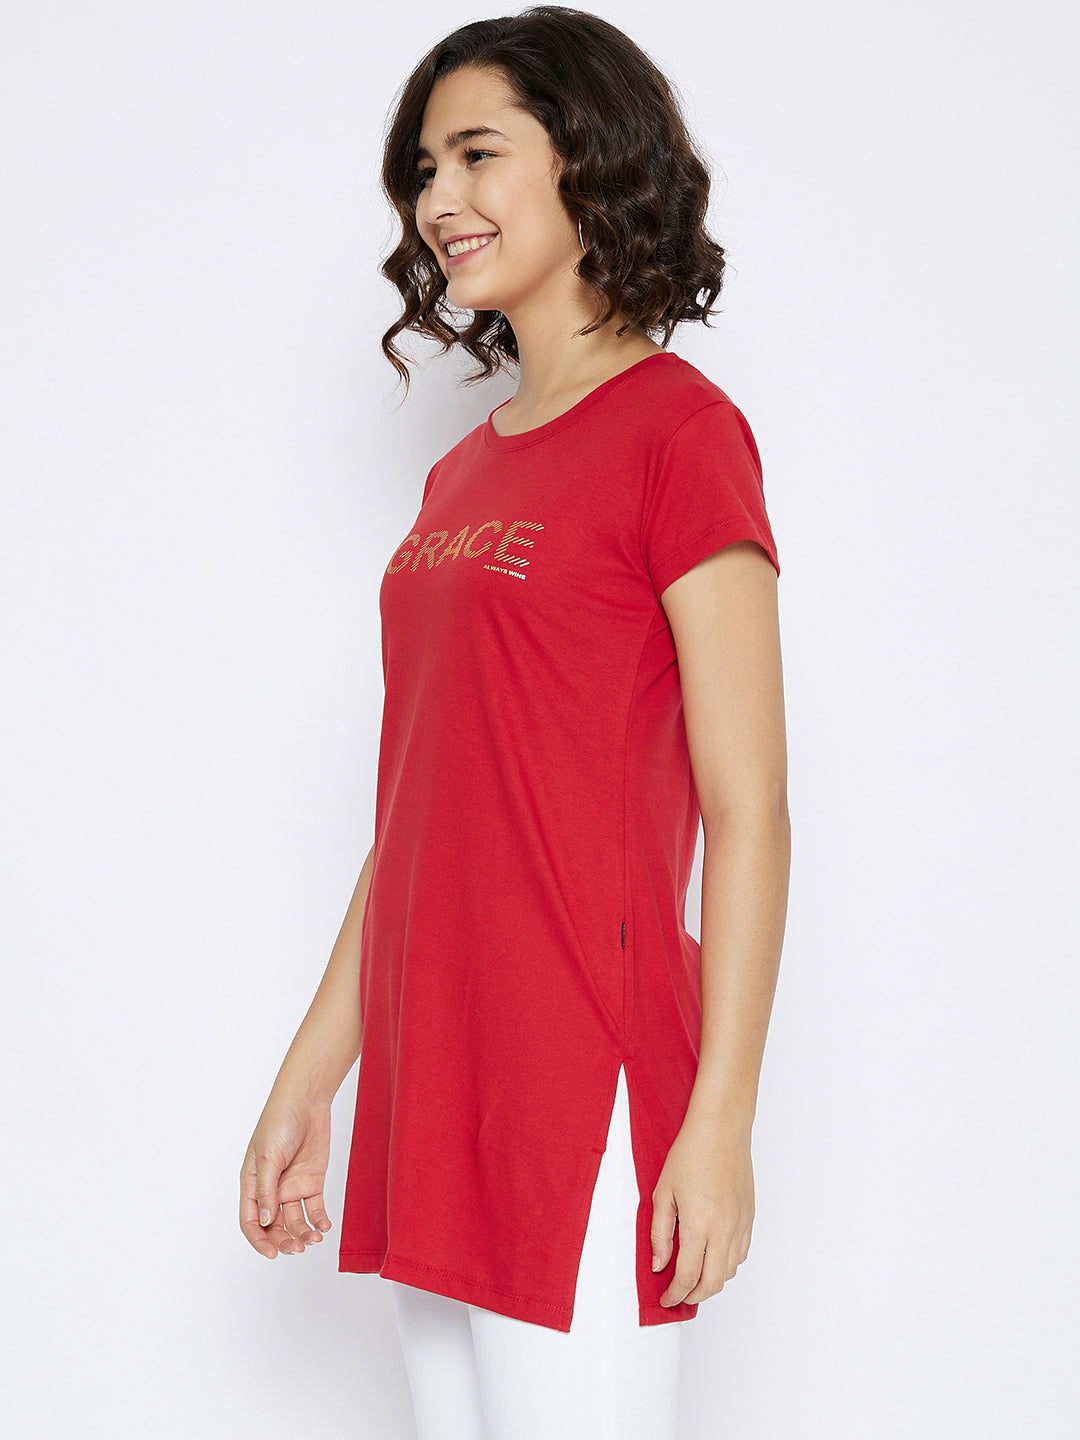 Red Printed Round Neck T-shirt - Women T-Shirts